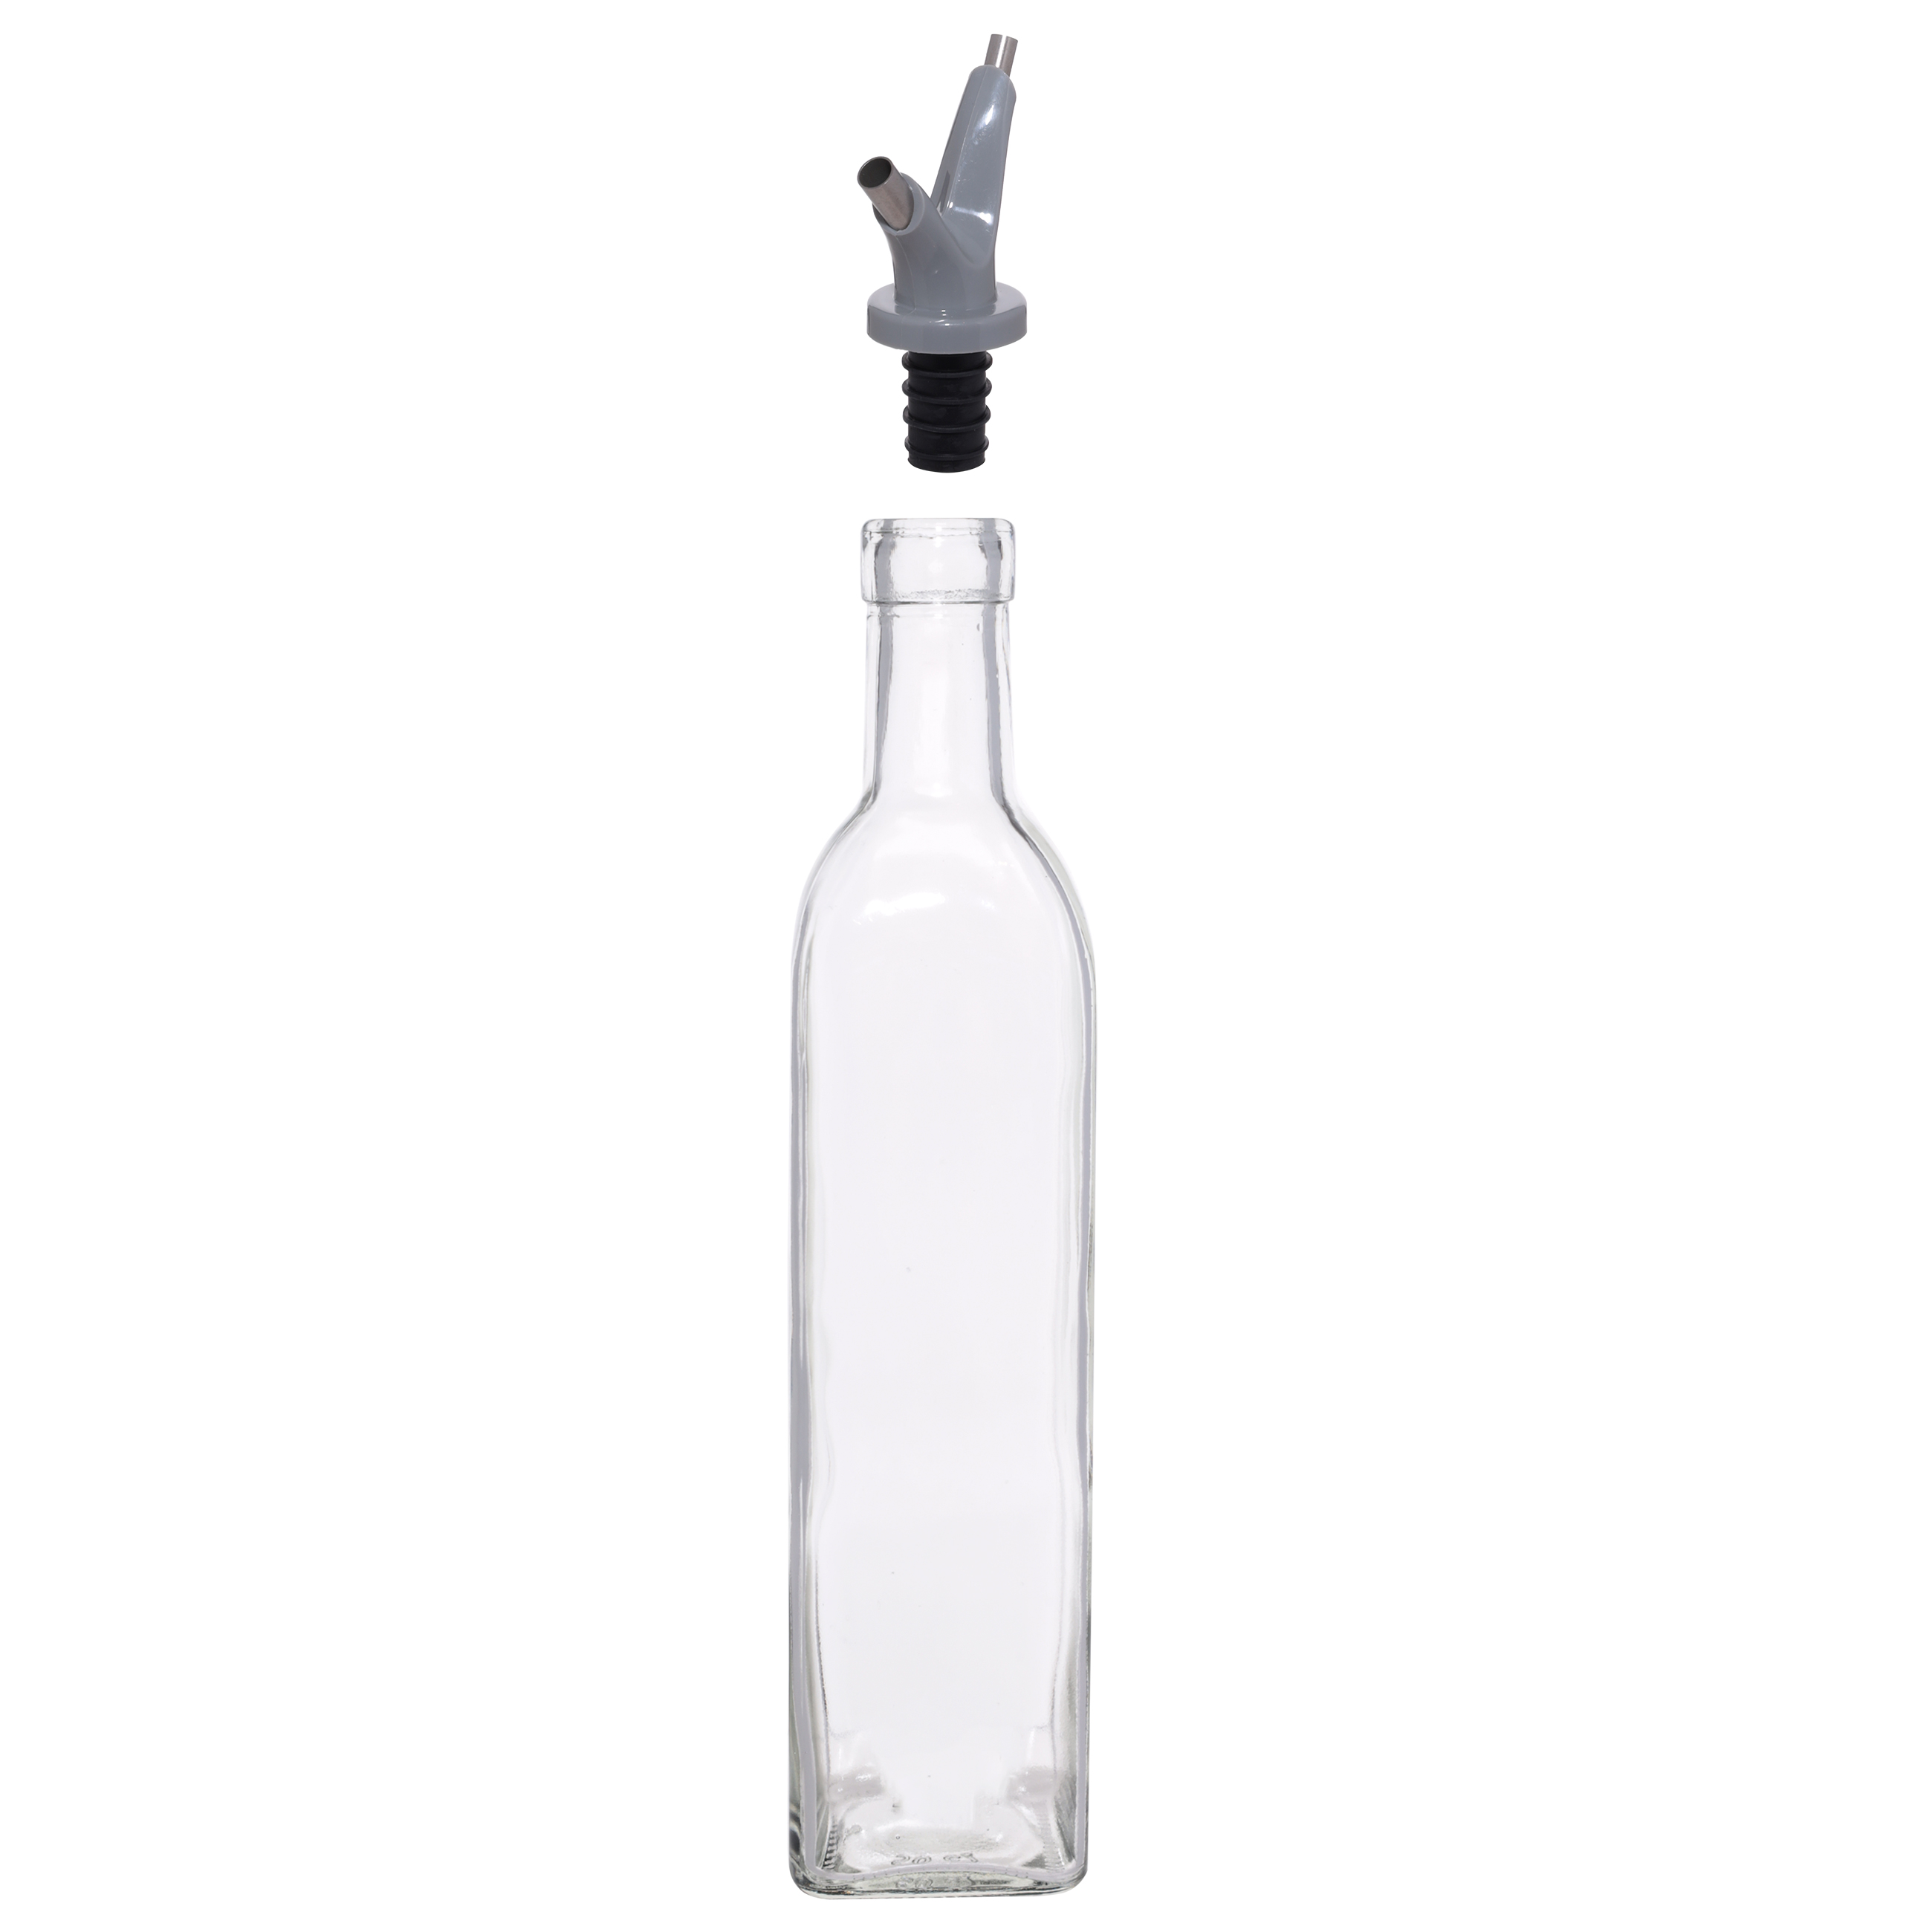 Oil or vinegar bottle, 500 ml, with double dispenser, Glass/plastic, Assist изображение № 2